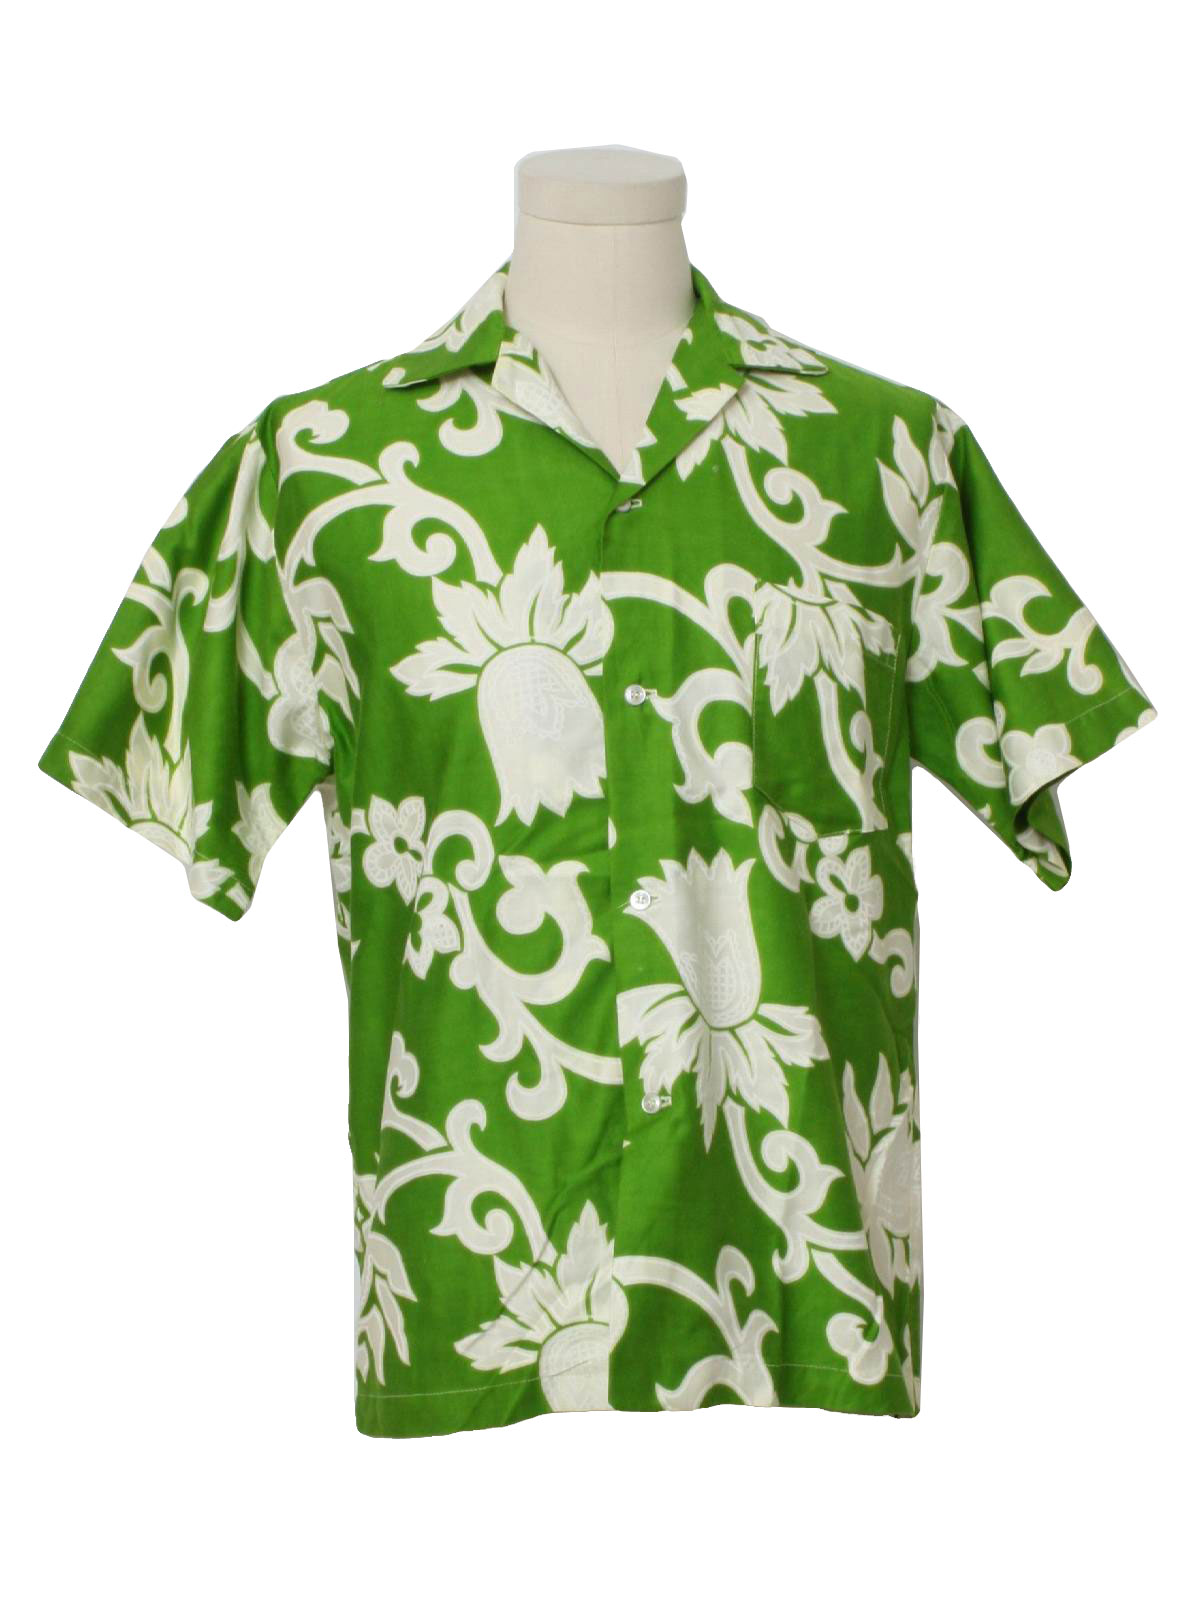 Vintage Krist Sixties Hawaiian Shirt: Early 60s -Krist- Mens lime green ...